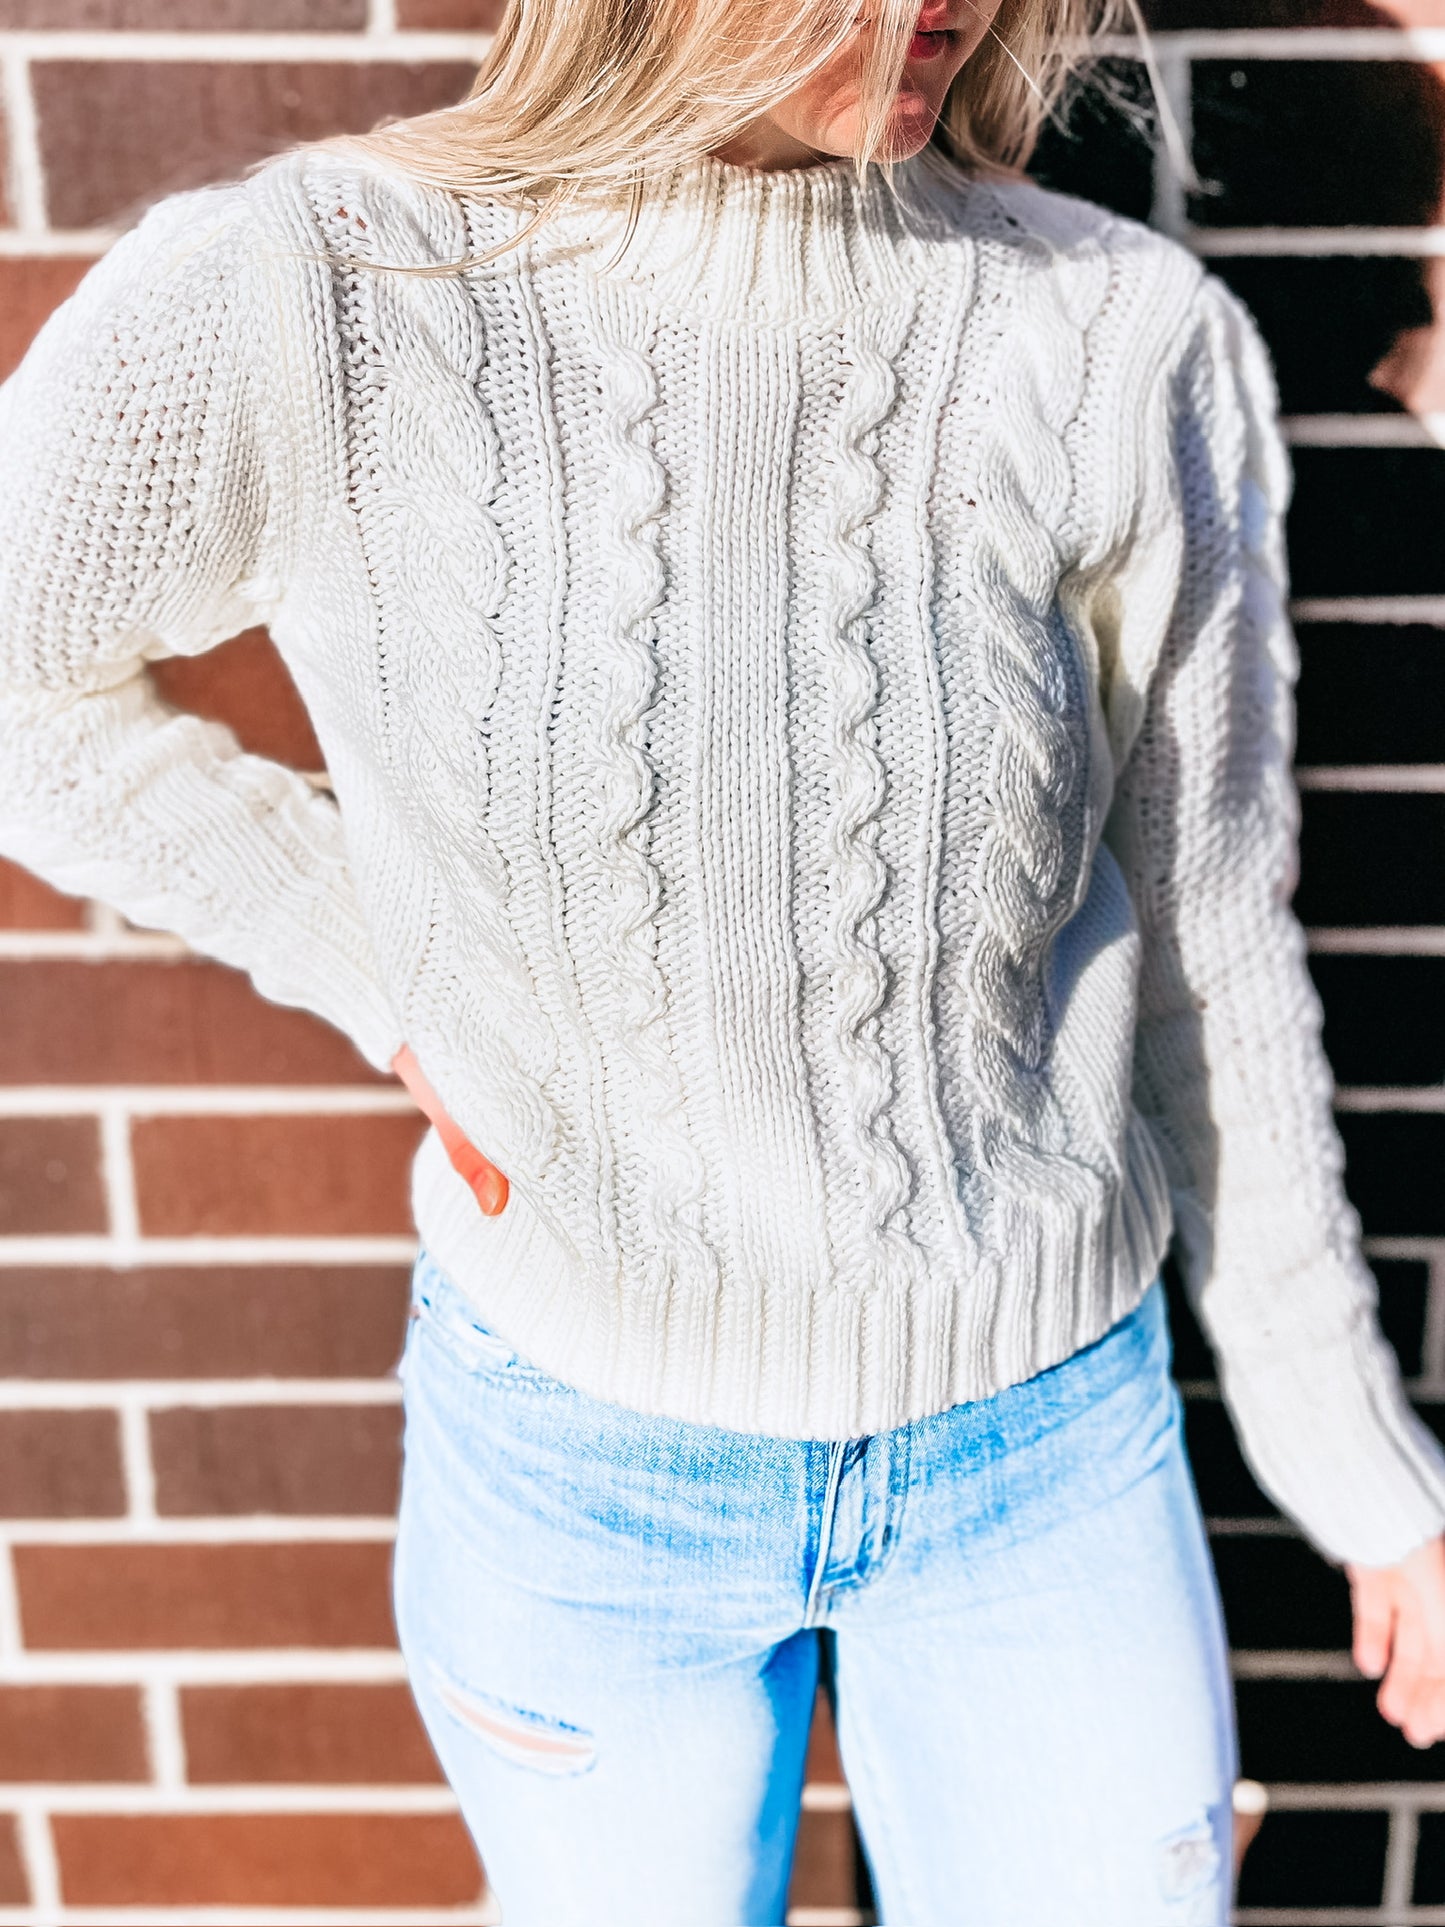 Catya Mock Neck Sweater